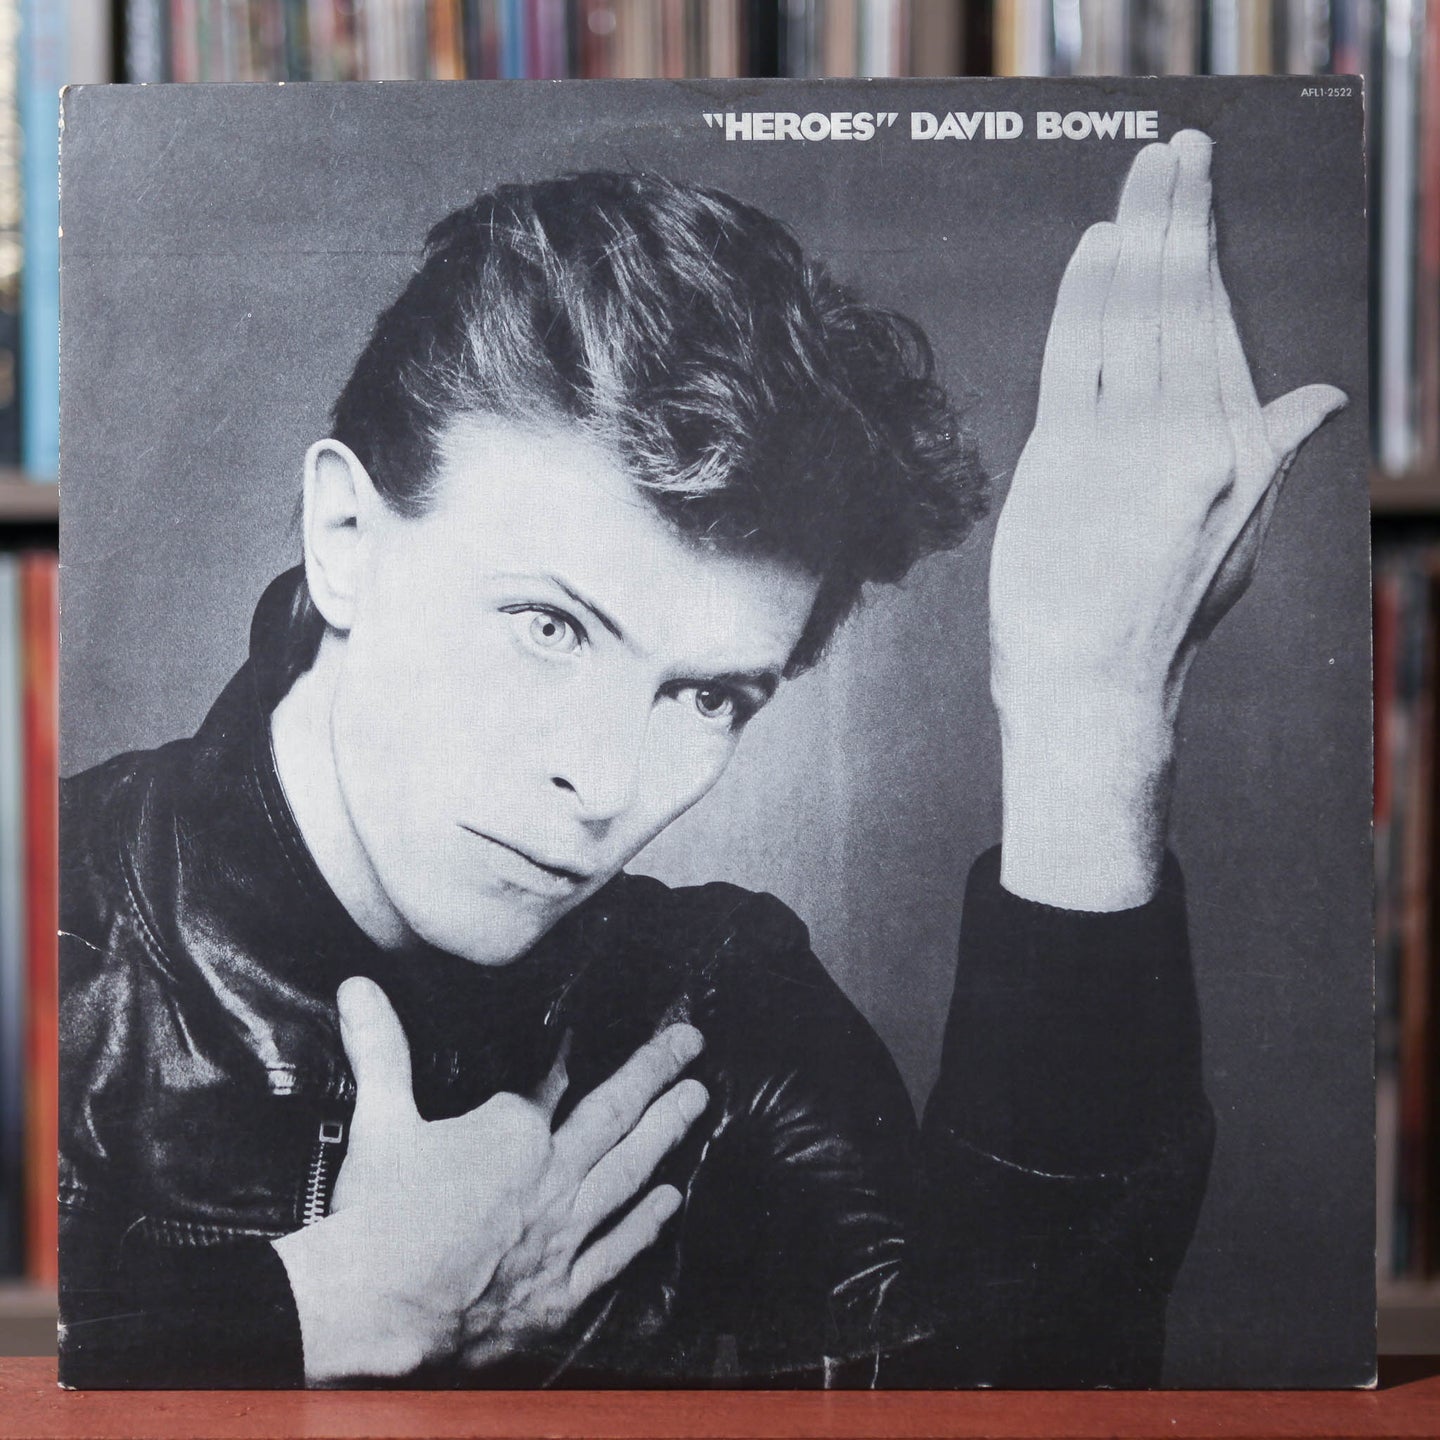 David Bowie - Heroes - 1977 RCA, VG+/VG+